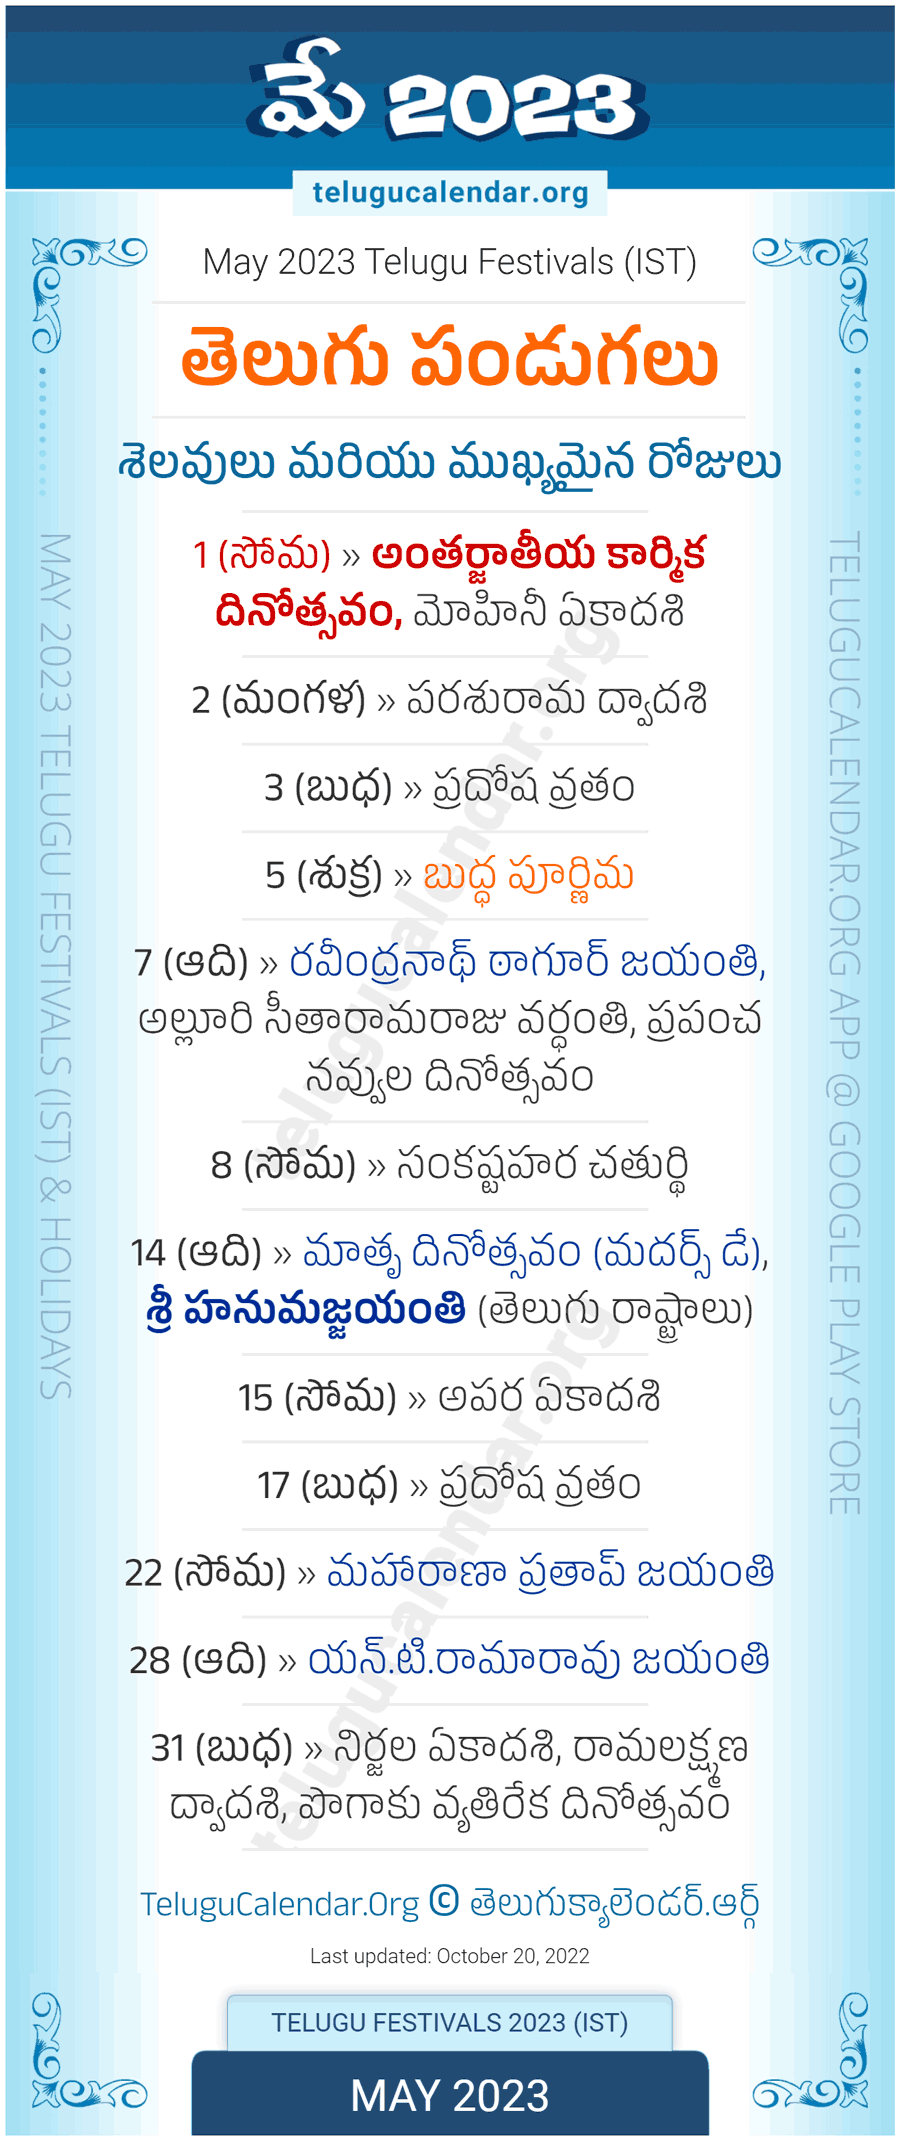 Telugu Festivals 2023 May